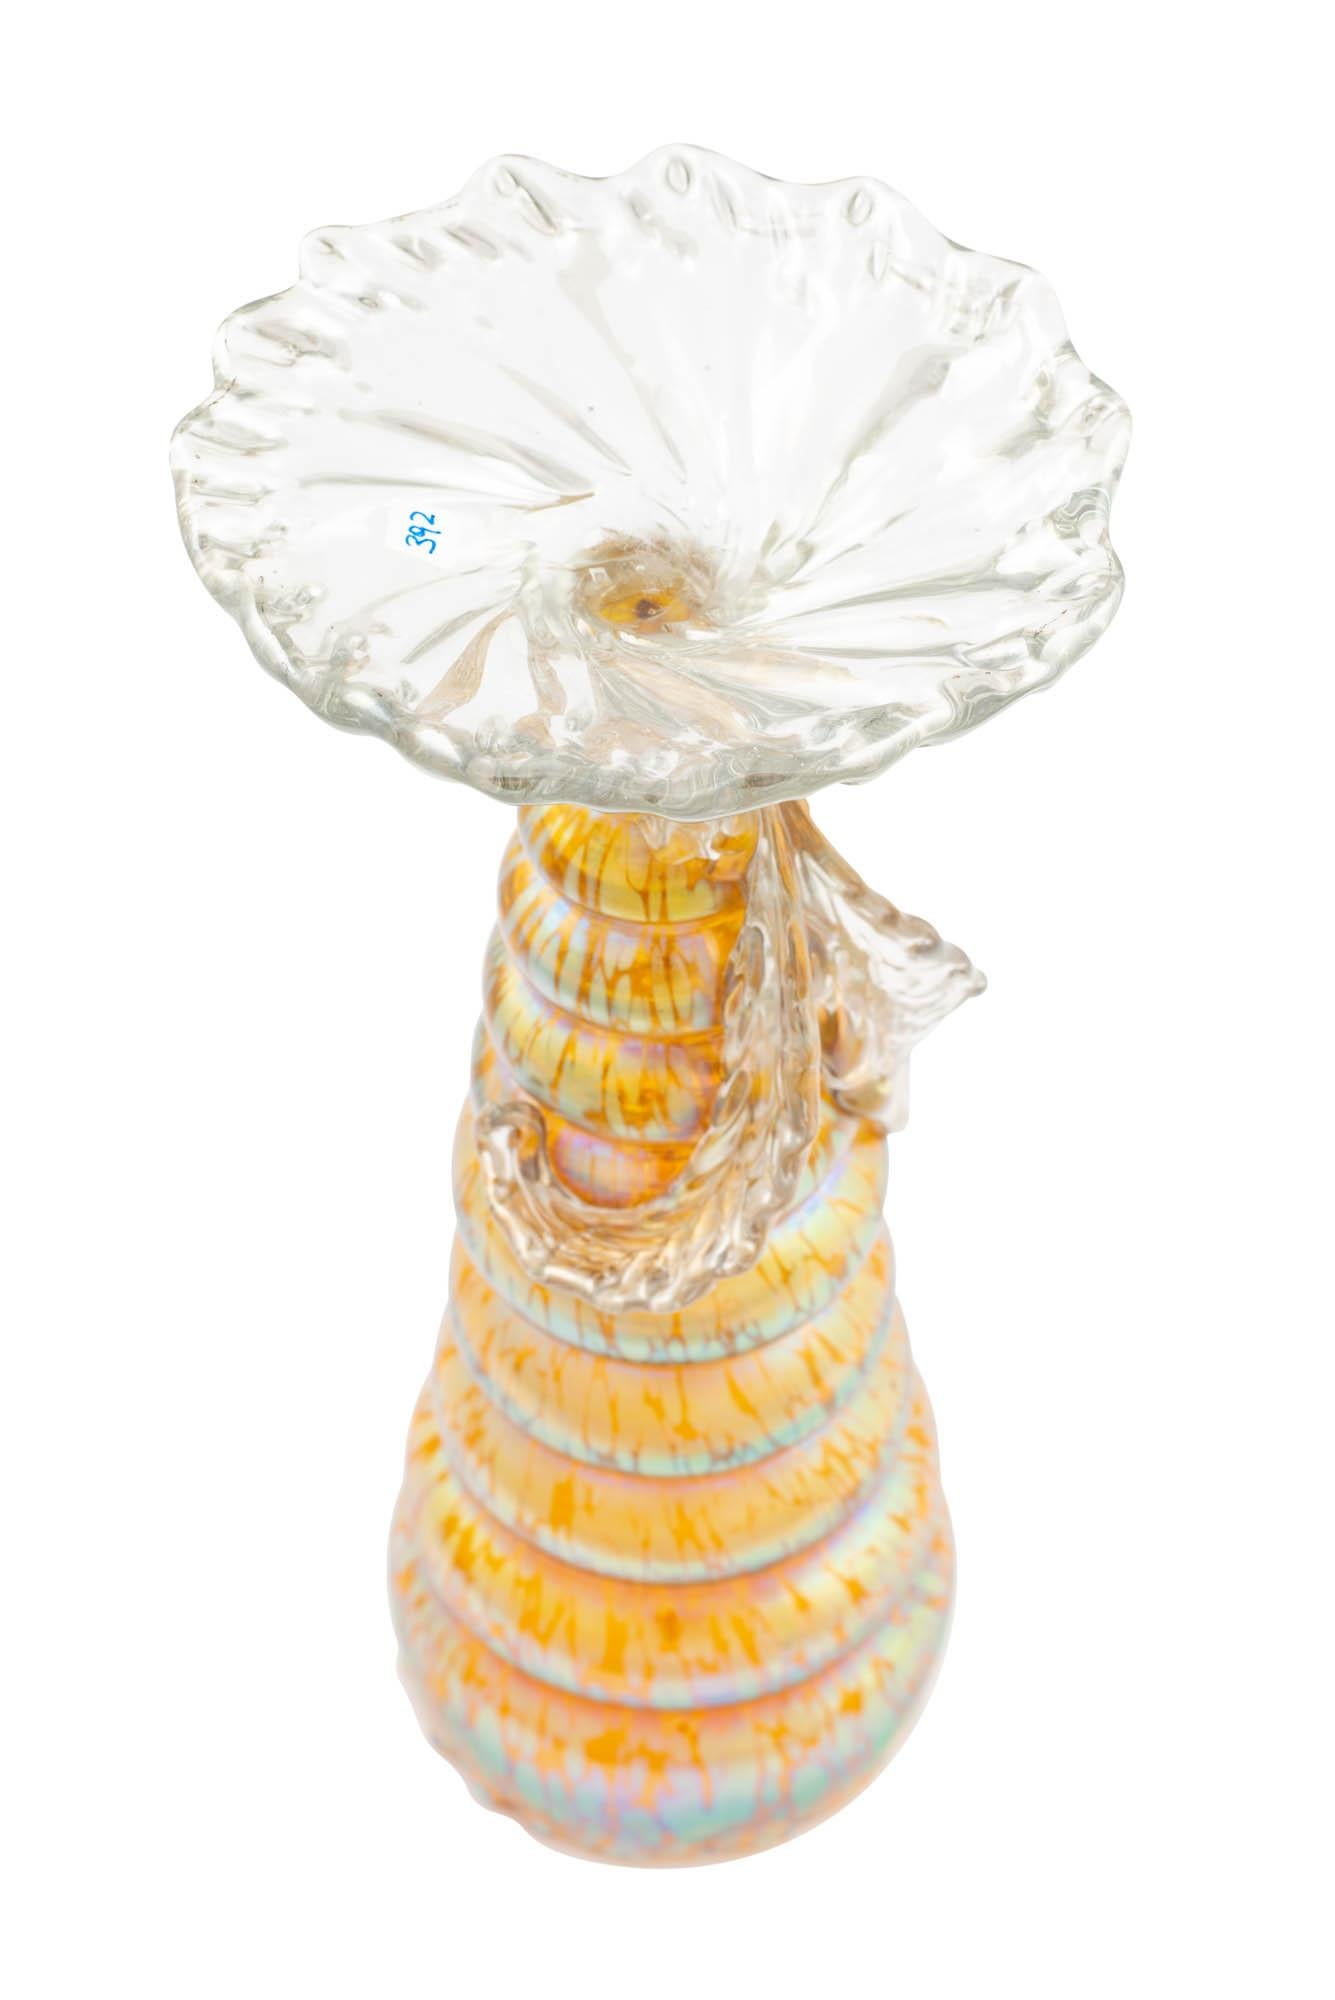 Art Nouveau Shell Vase Johann Loetz Witwe Decor Candia Papillon, circa 1897-1898